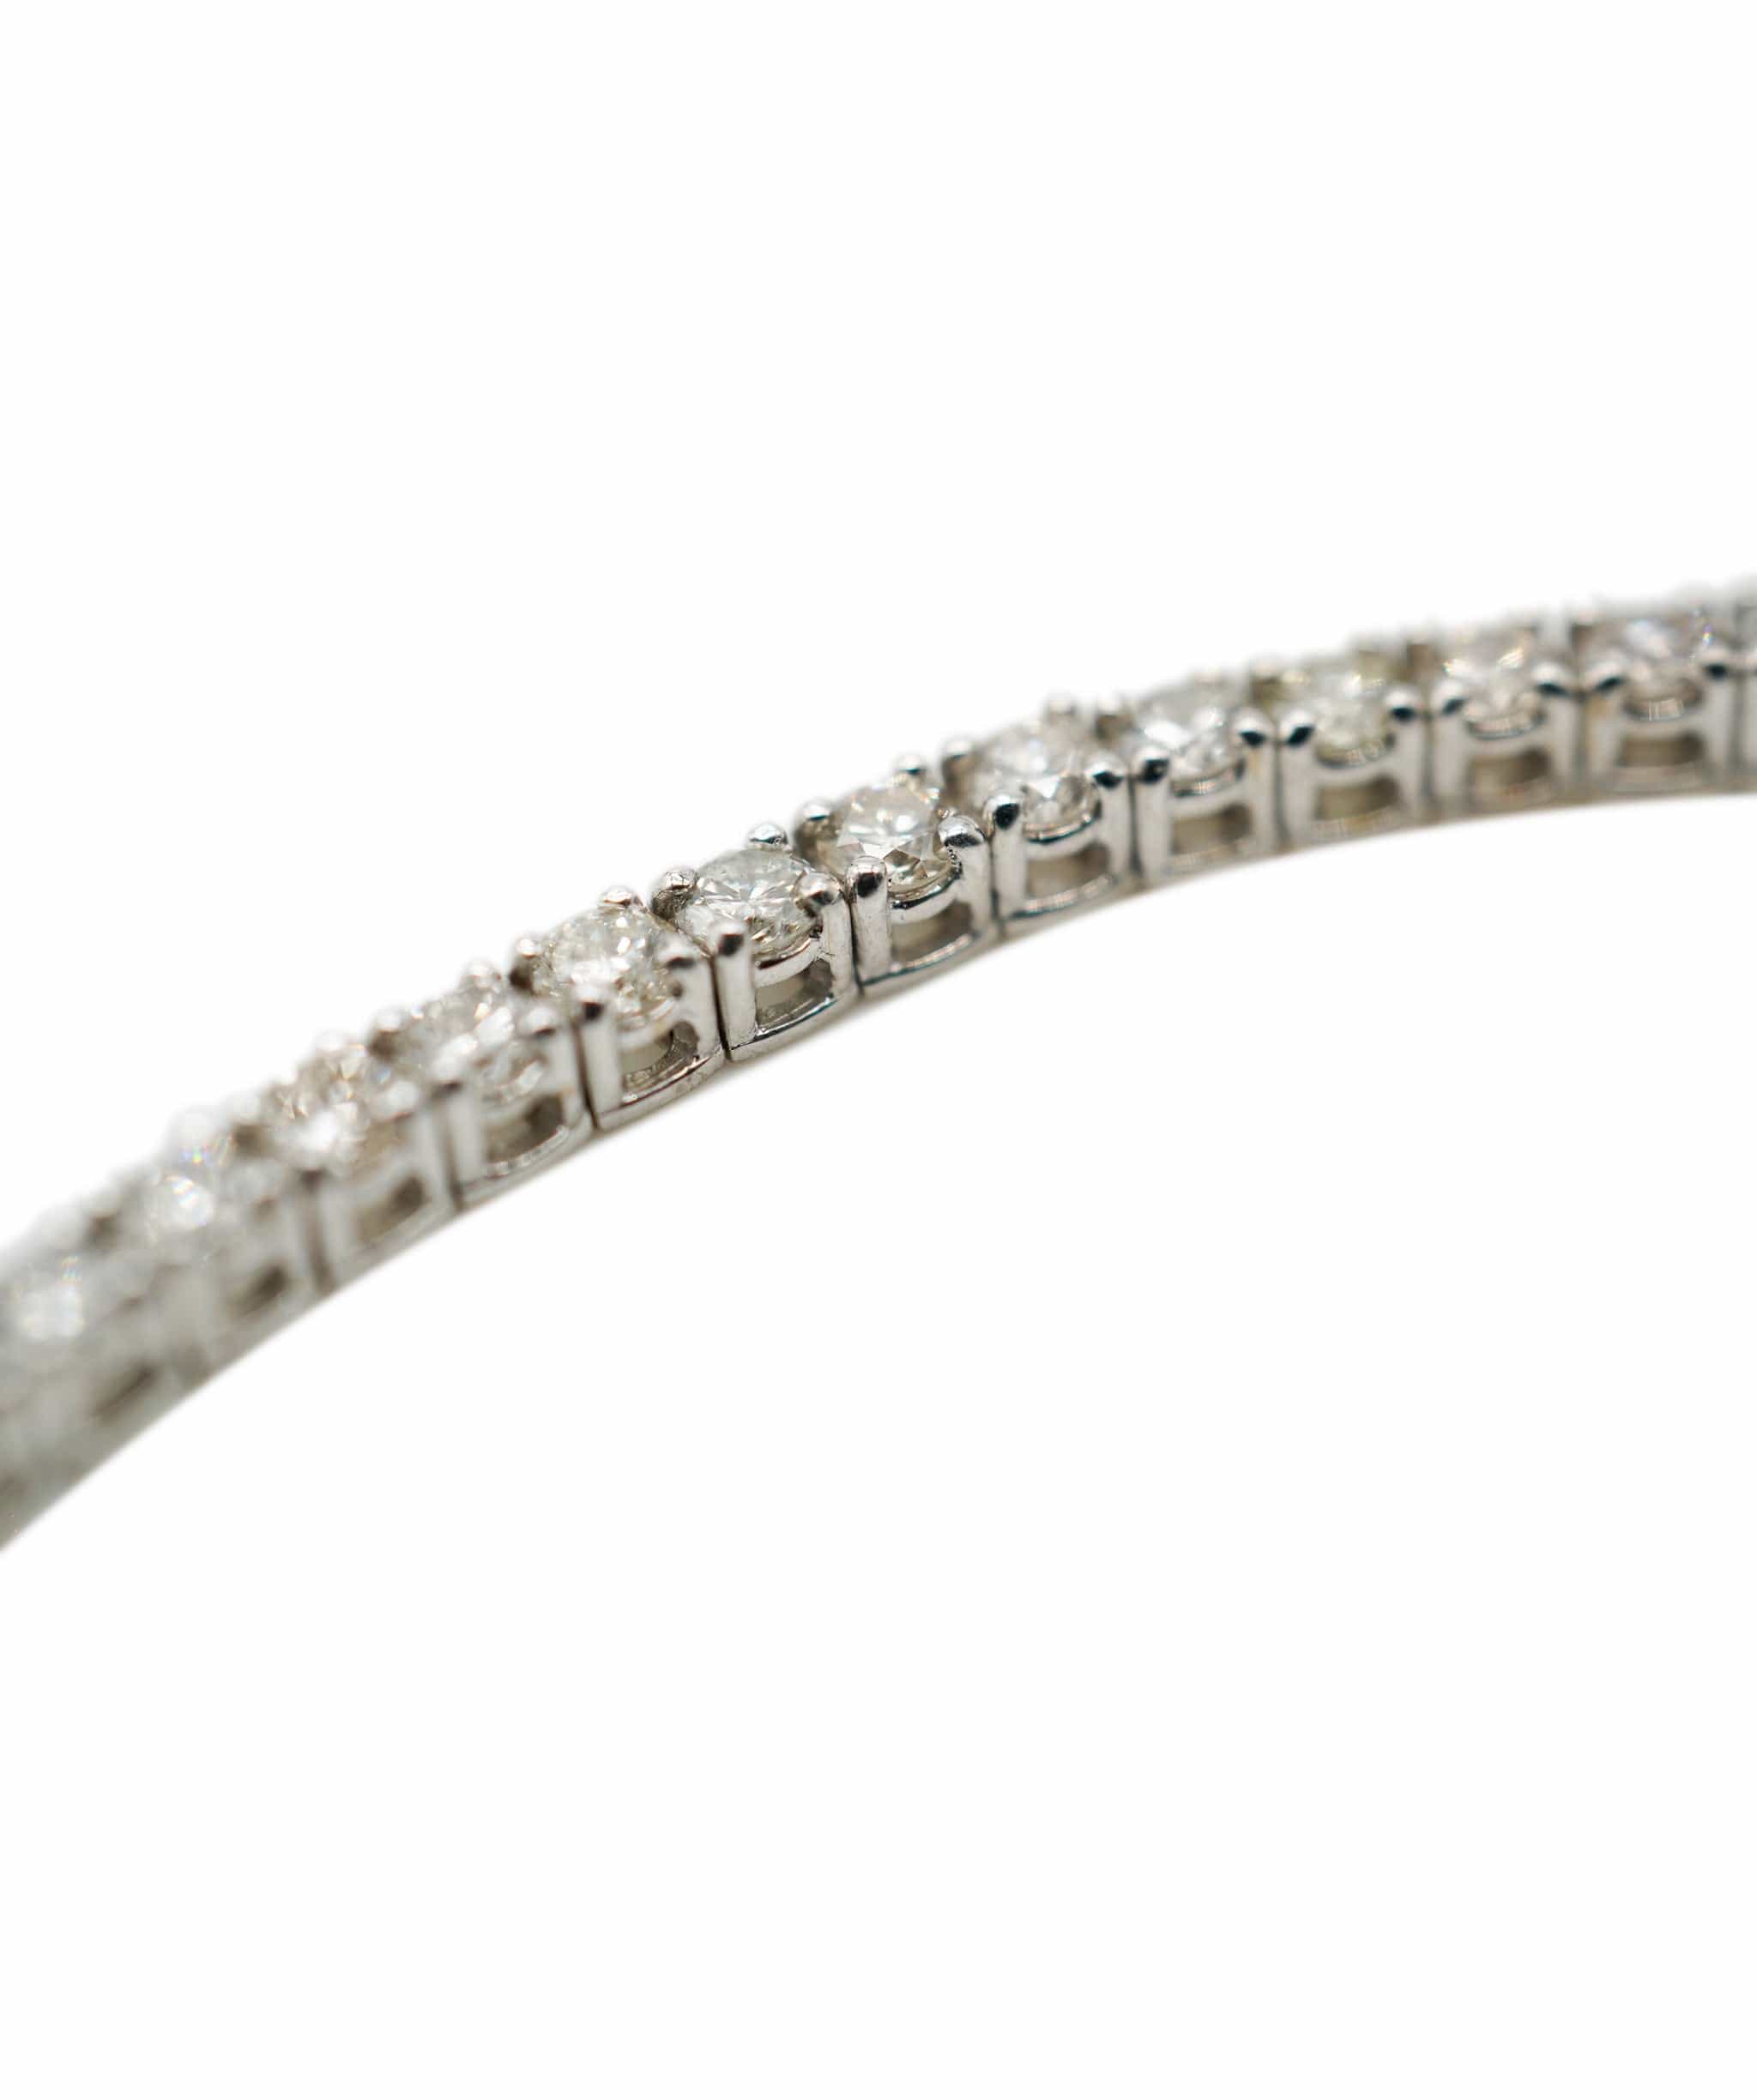 Luxury Promise Diamond tennis bracelet 3.28 carats total, white gold   AHC1822